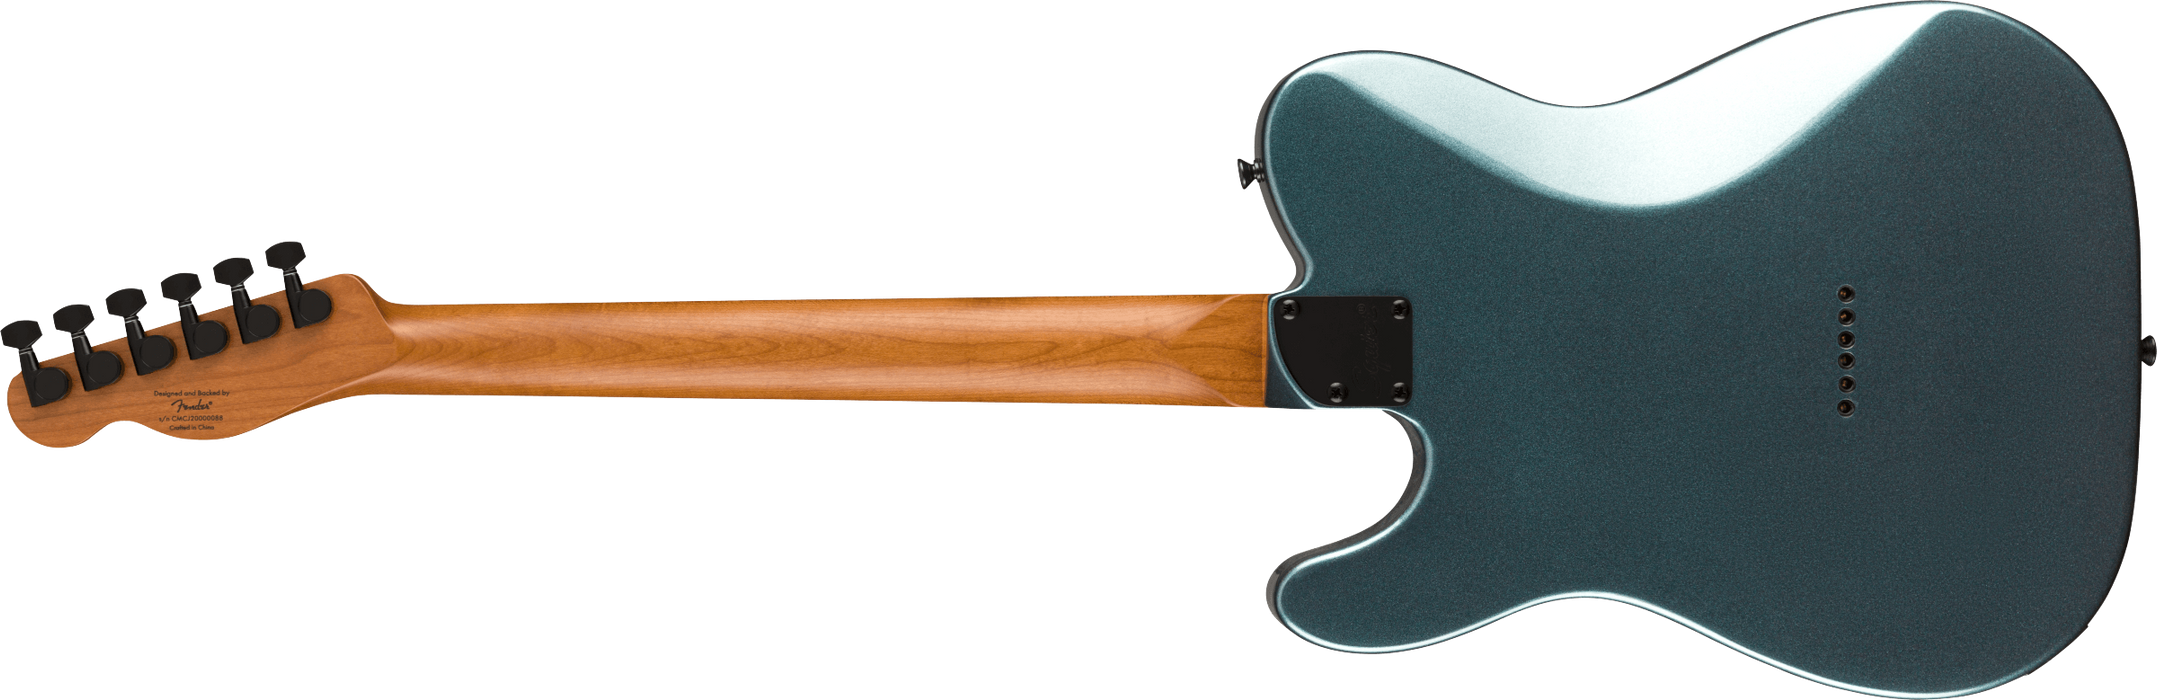 Squier Contemporary Telecaster RH Roasted Maple Fingerboard Electric Guitar - Gunmetal Metallic